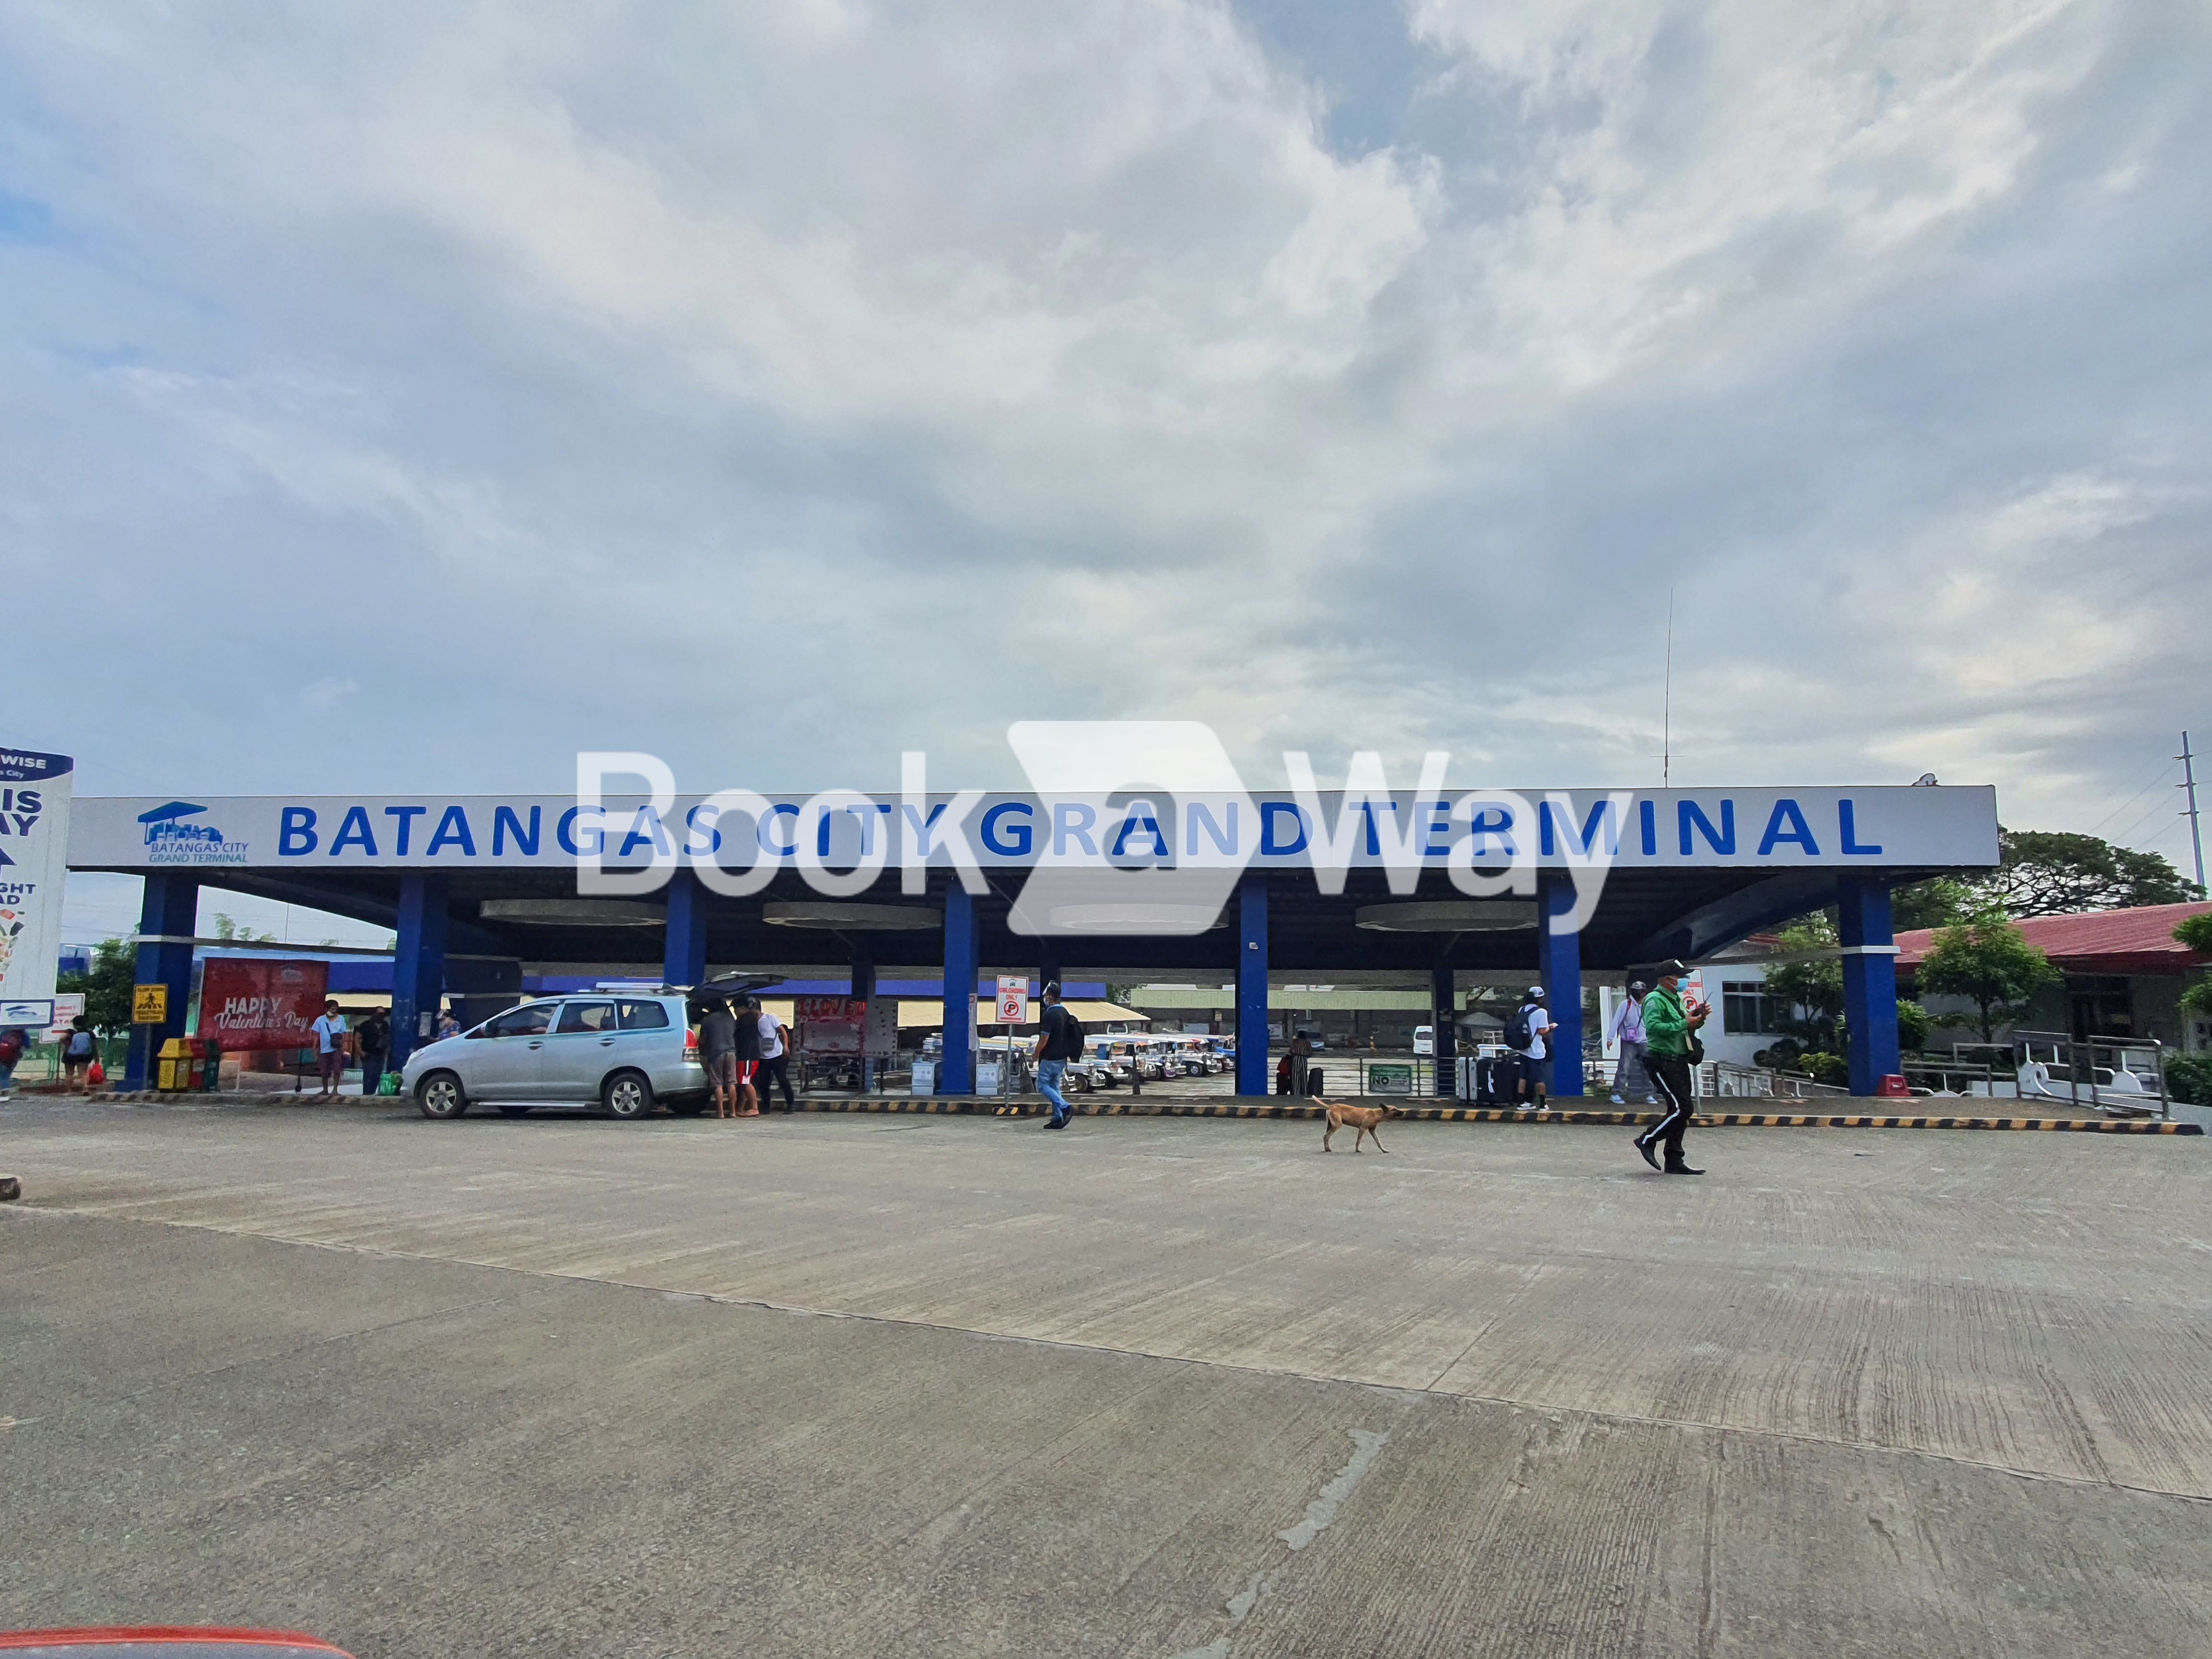 Batangas City Grand Terminal